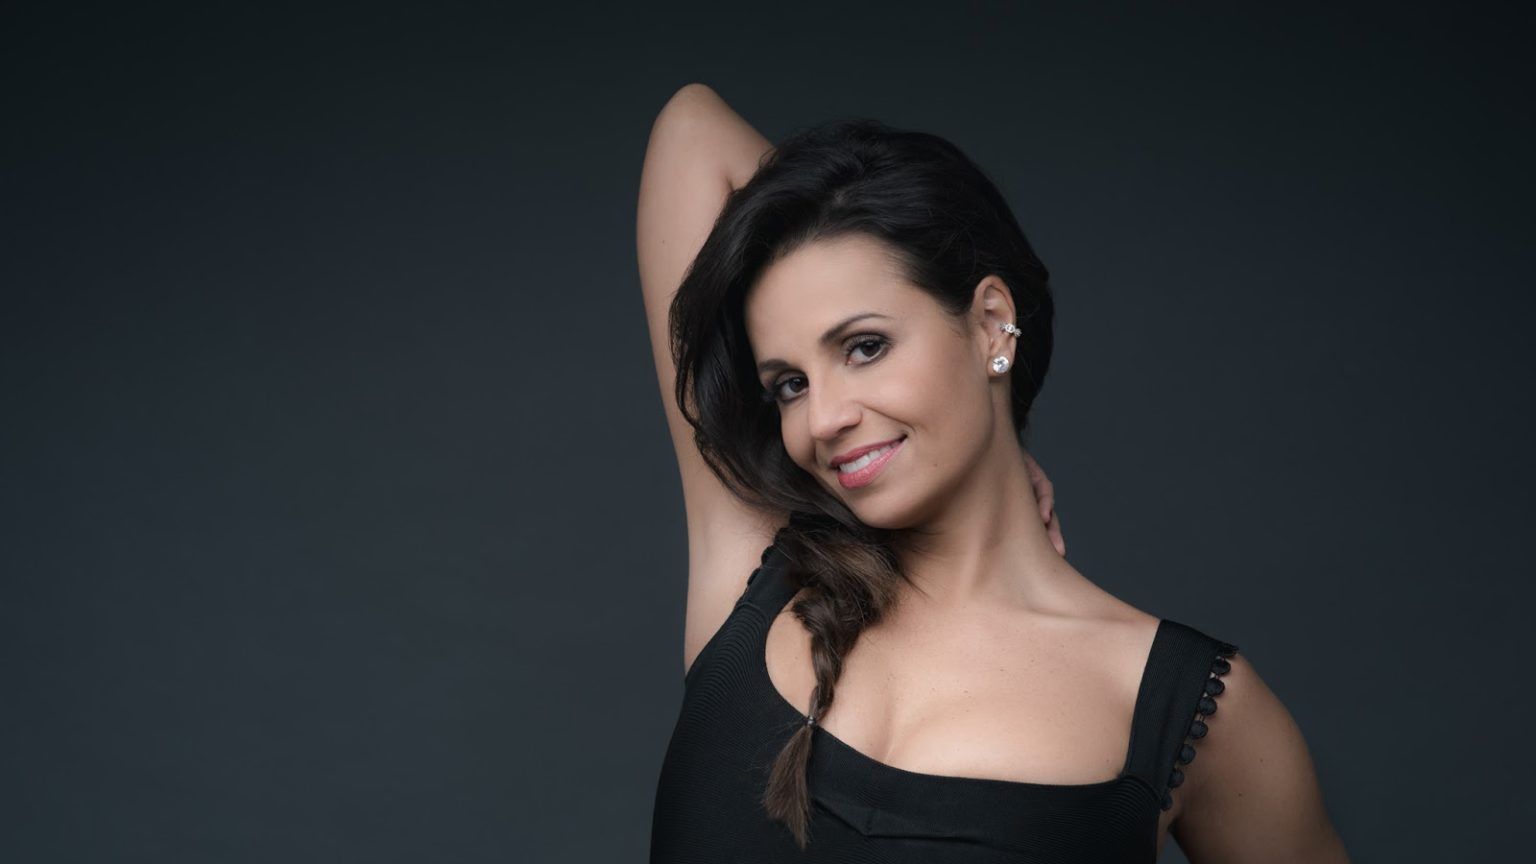 Carla Cottini encabeça videoclipe motivacional com estrelas da ópera; assista